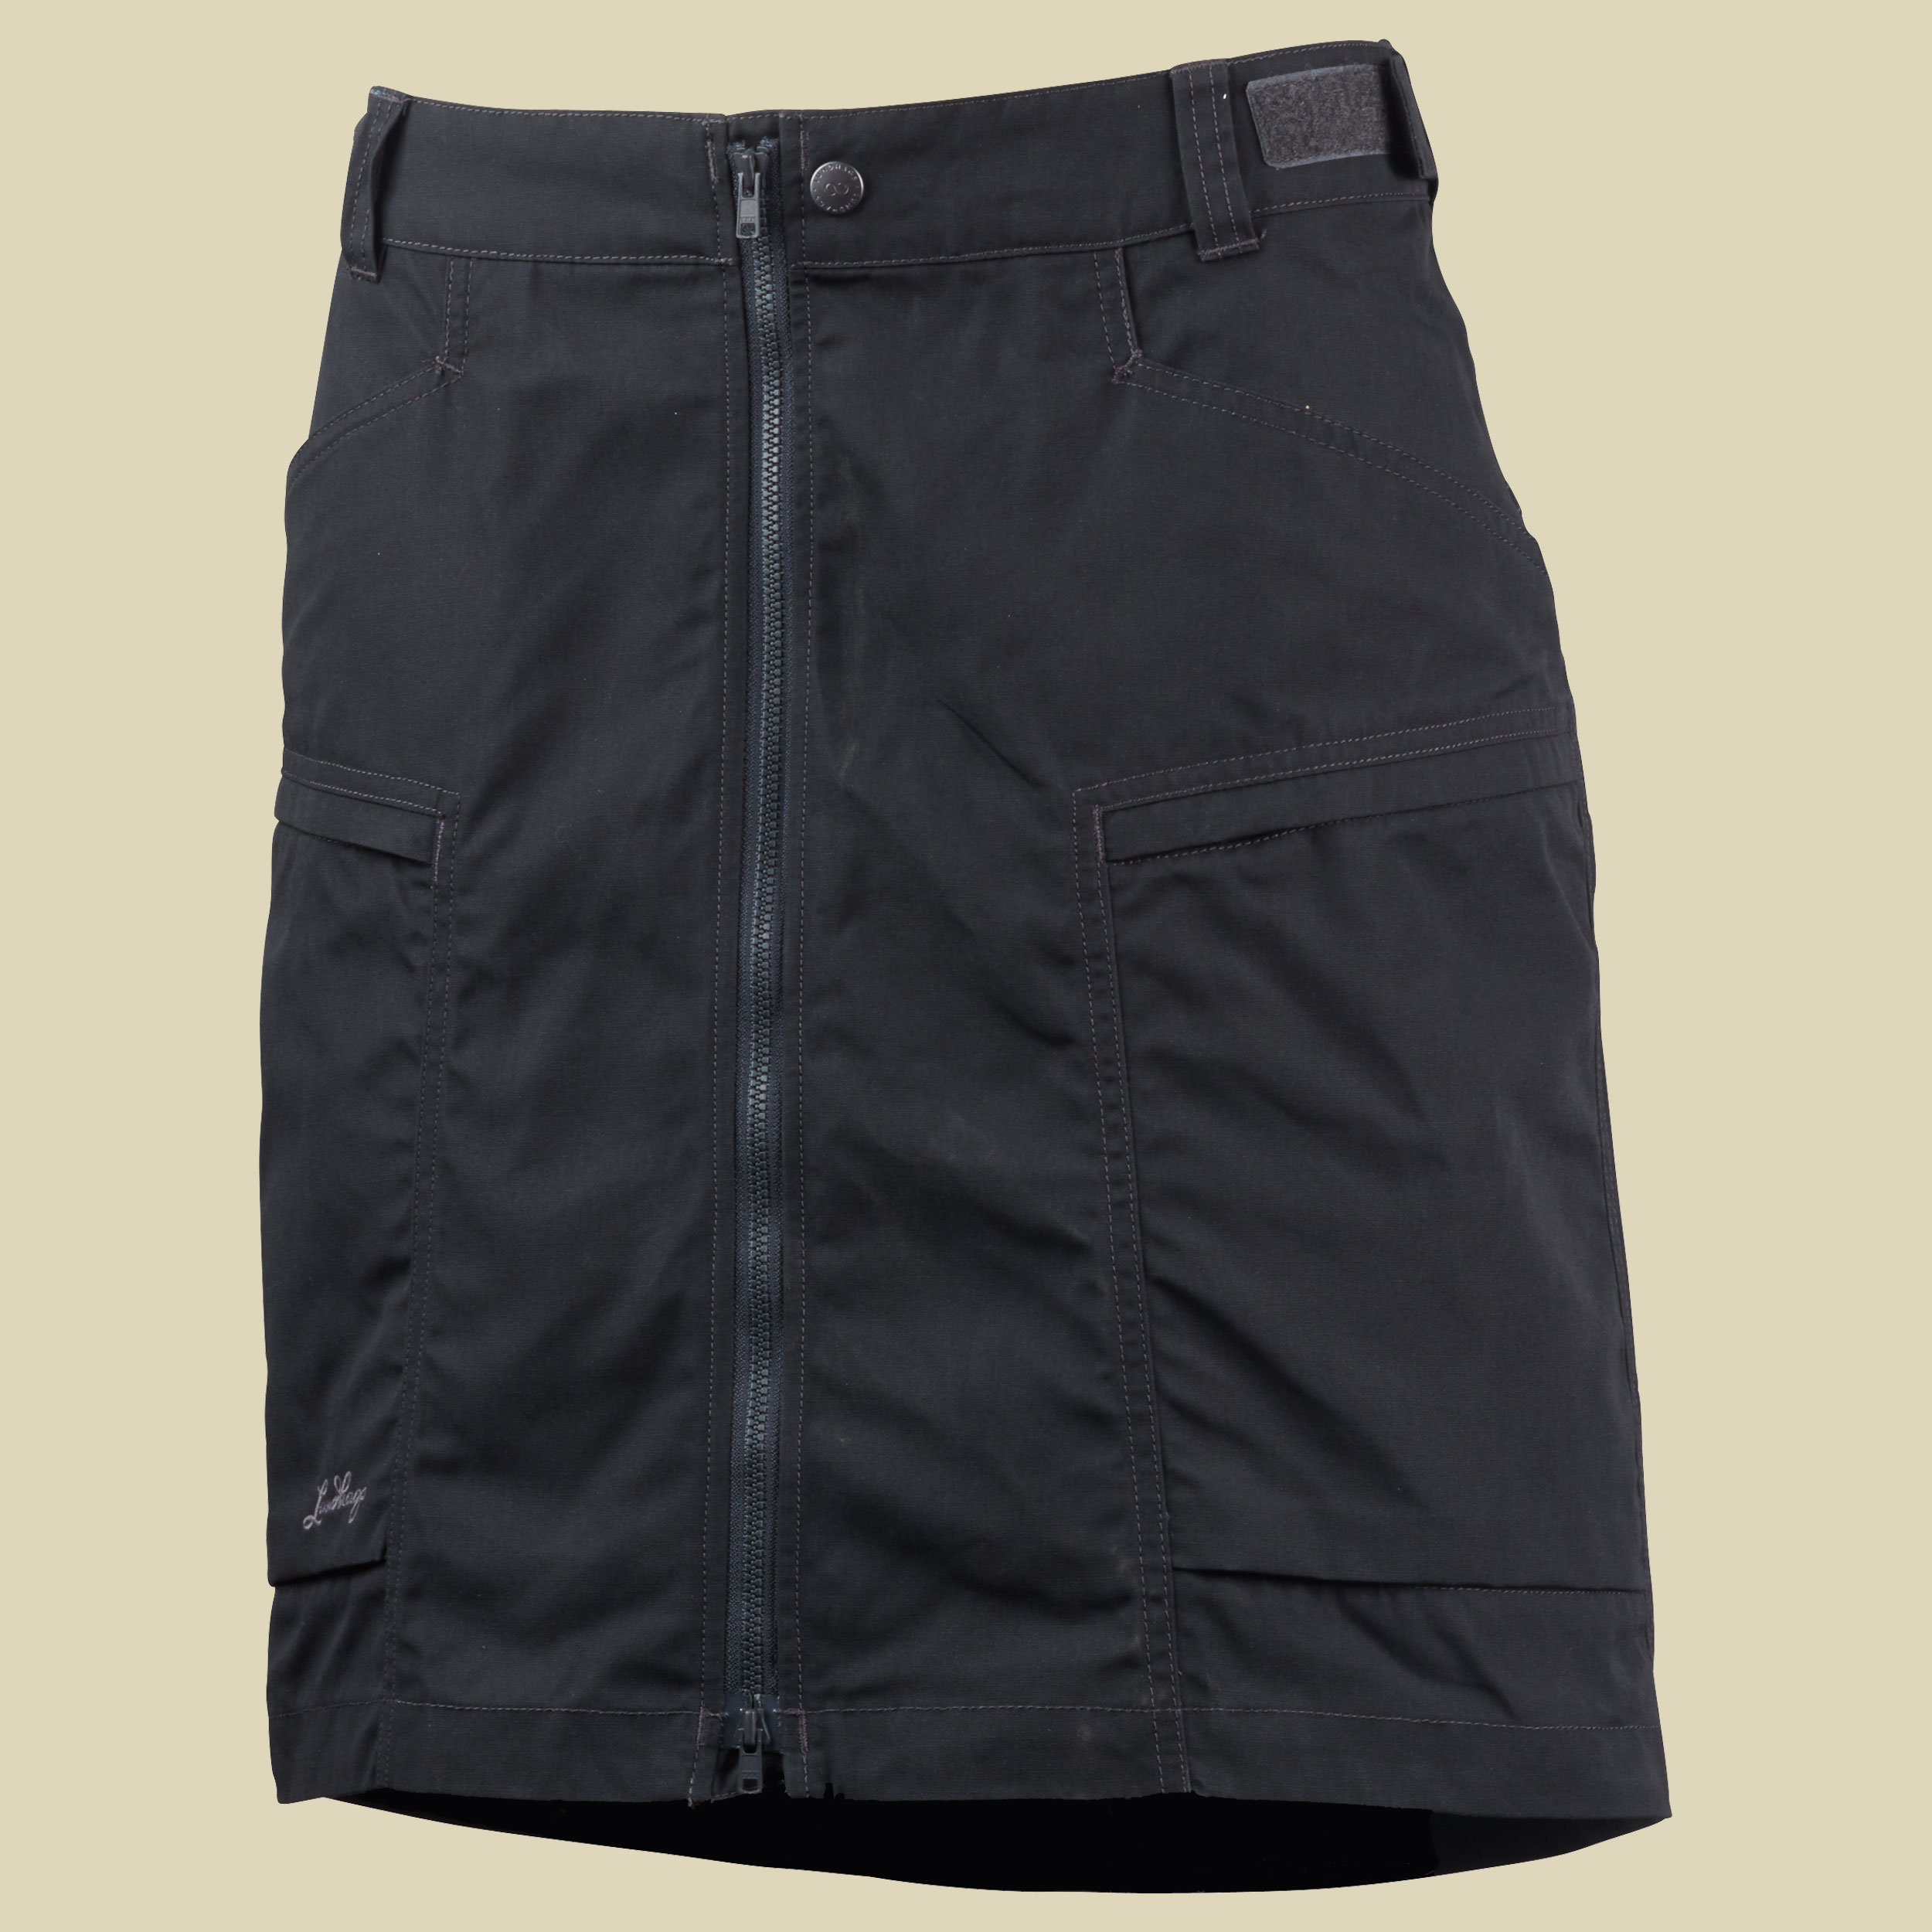 Tiven Skirt Women Größe 38 Farbe charcoal